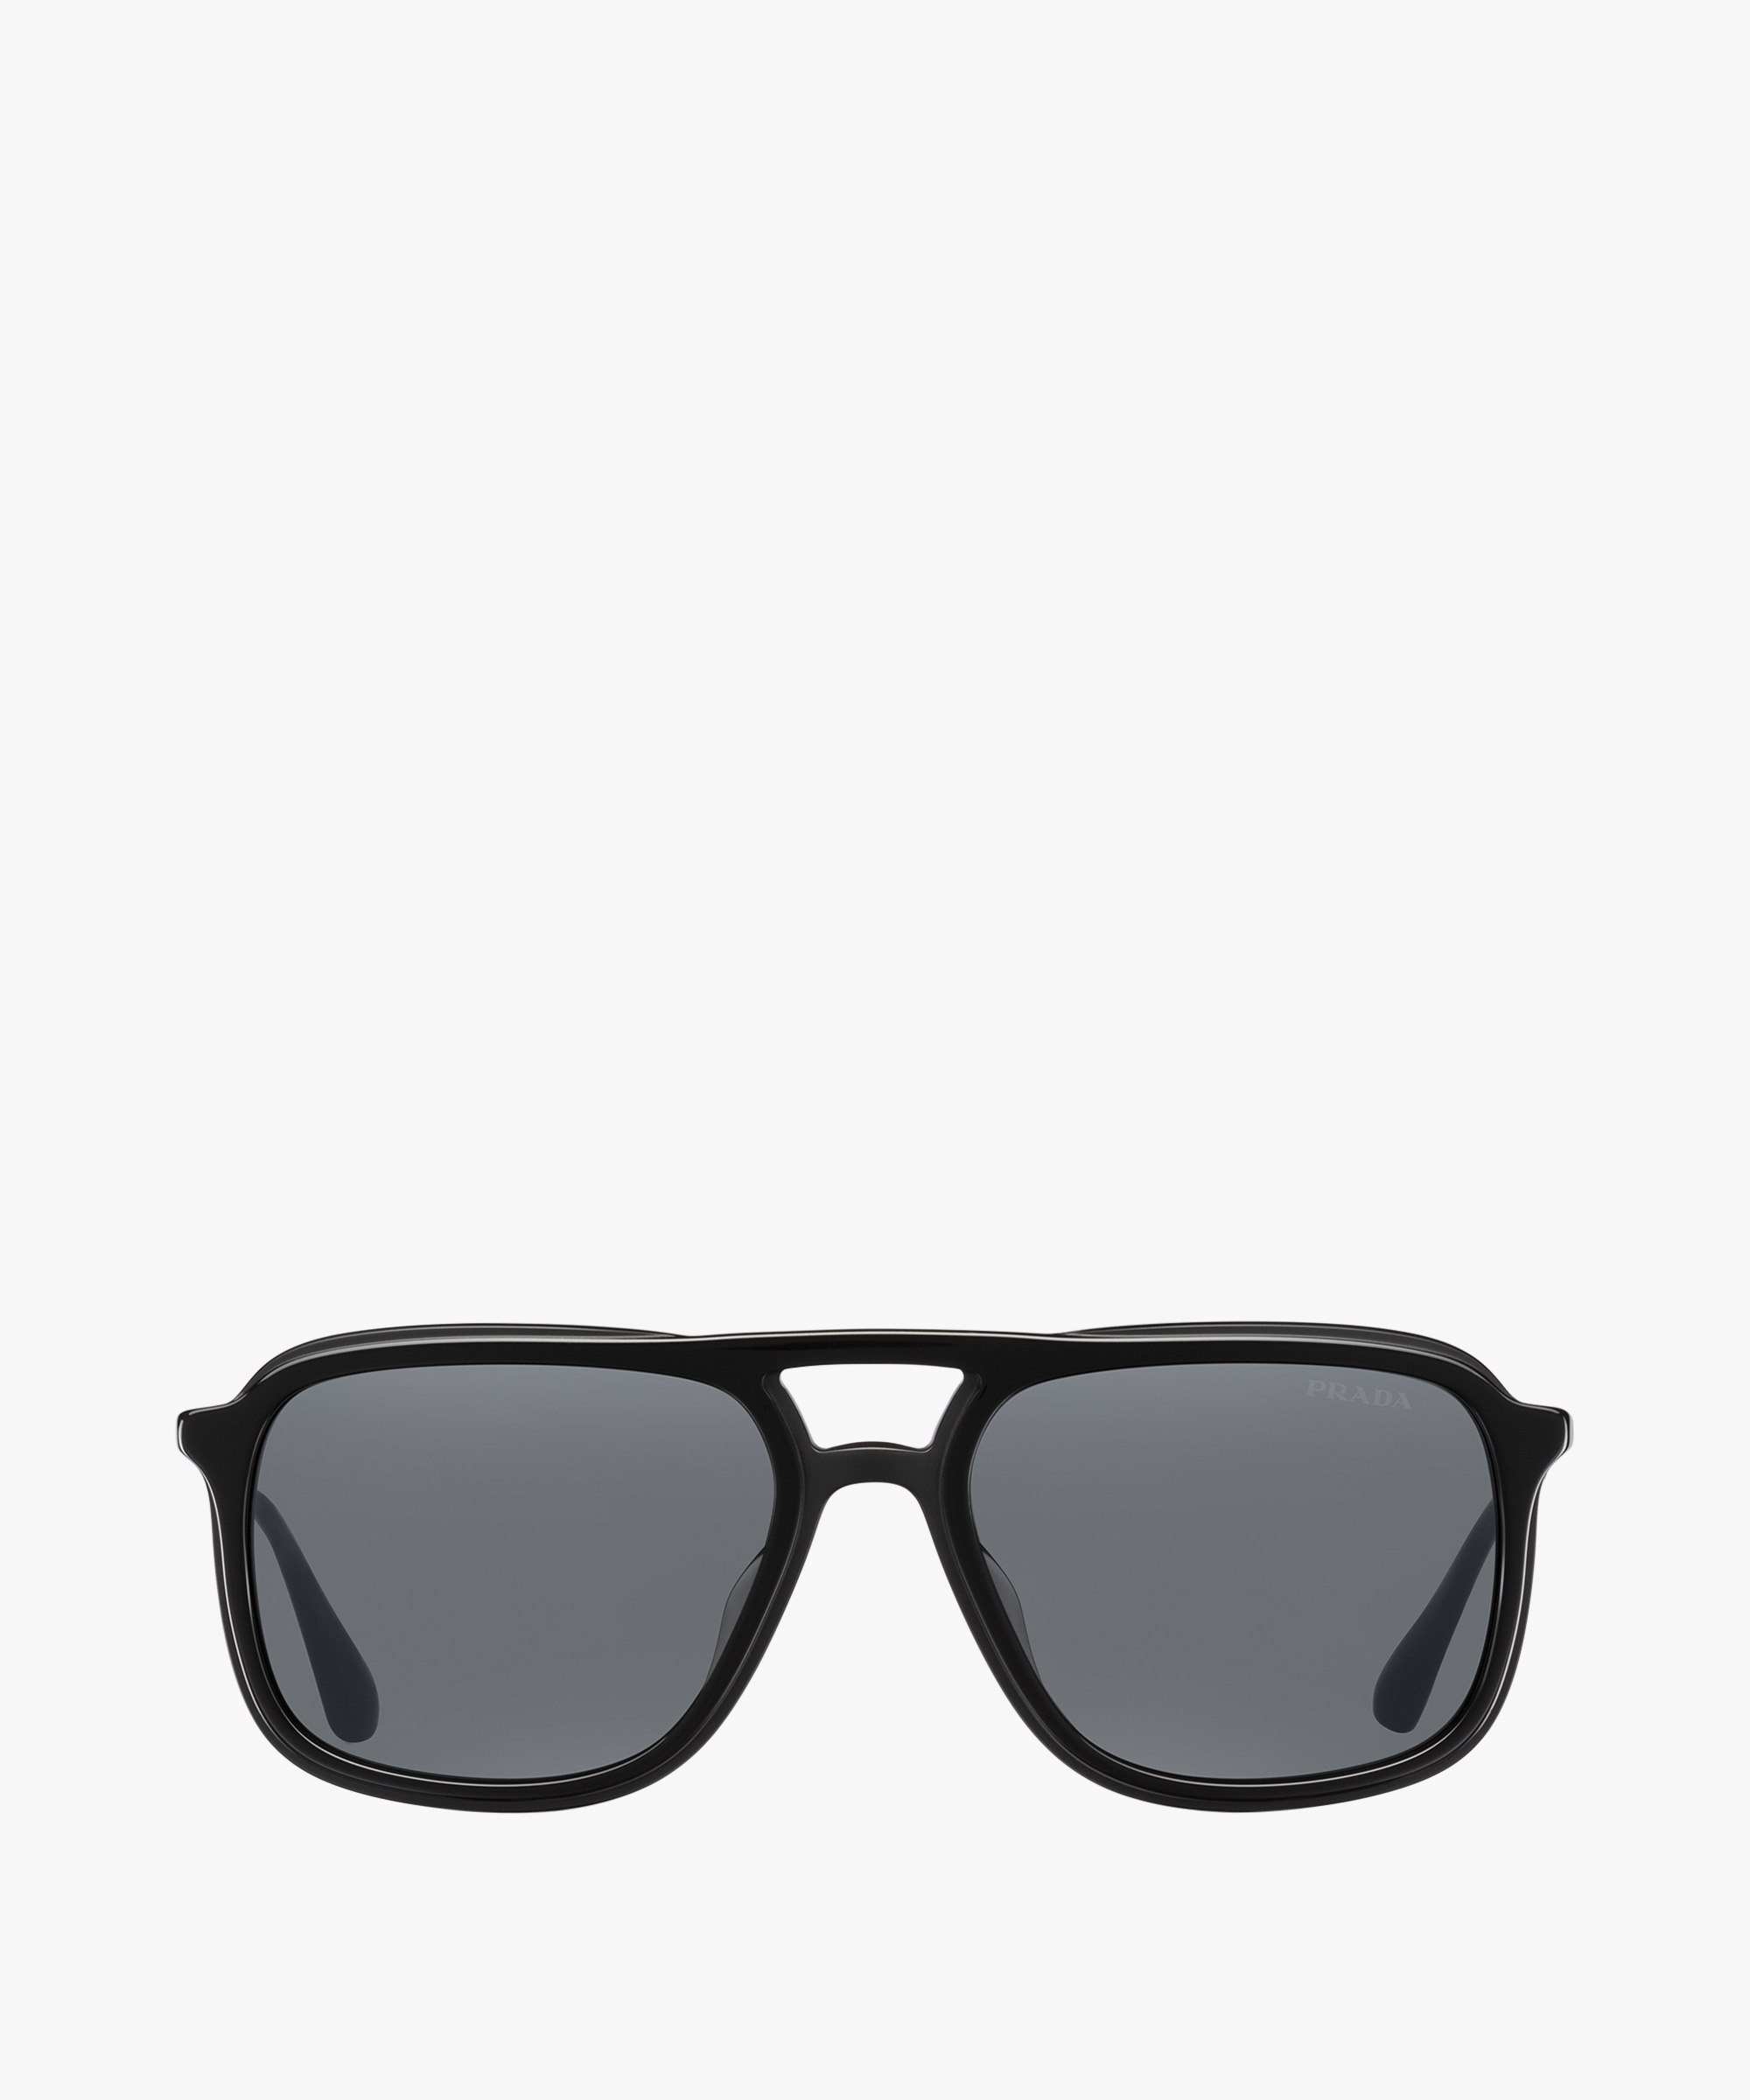 Prada Game sunglasses | Prada